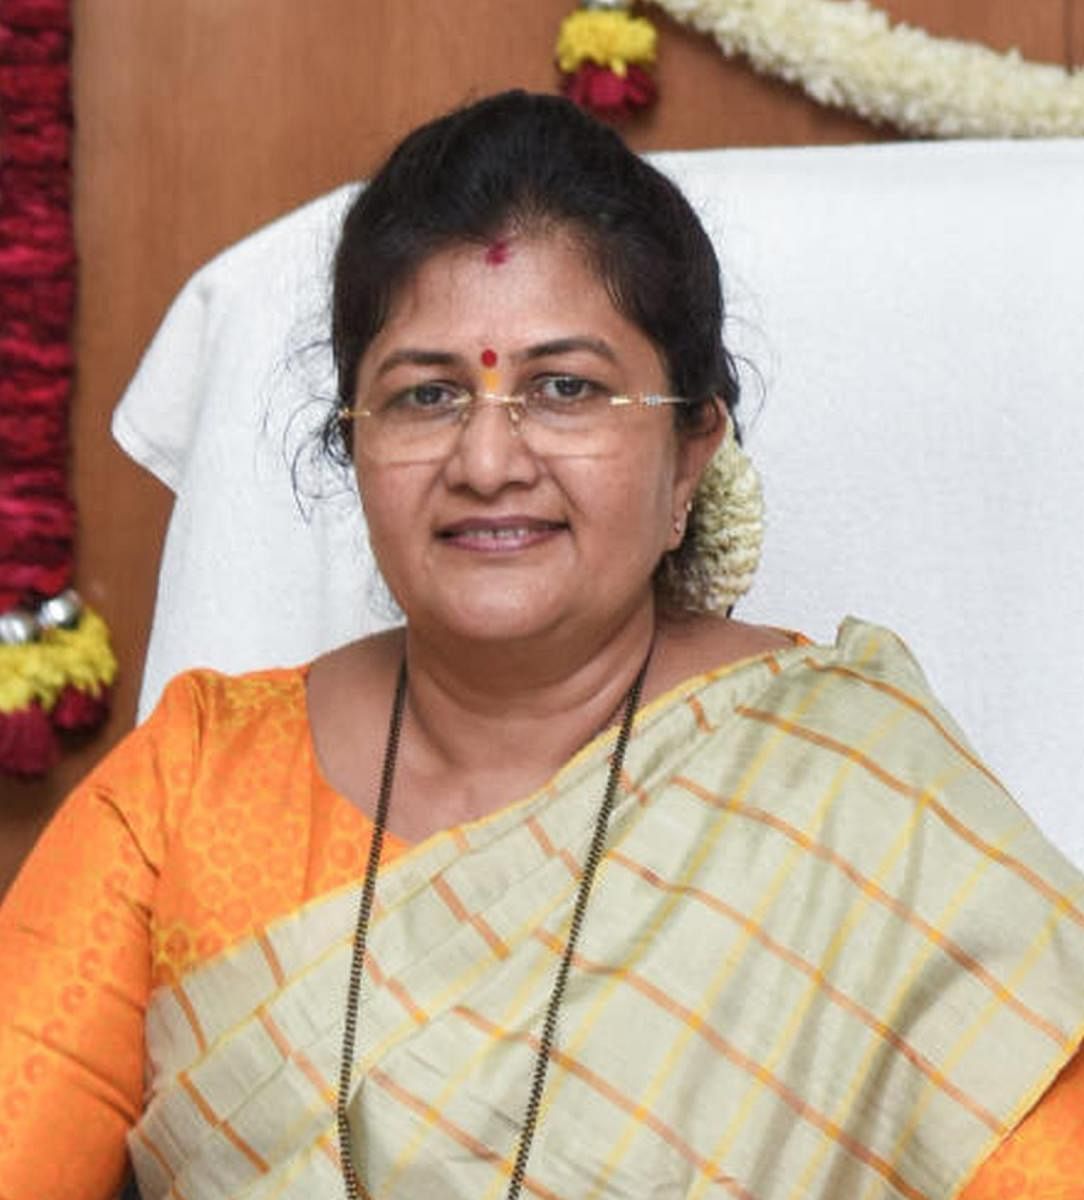  Shashikala Jolle, Minister of Women and Child Development